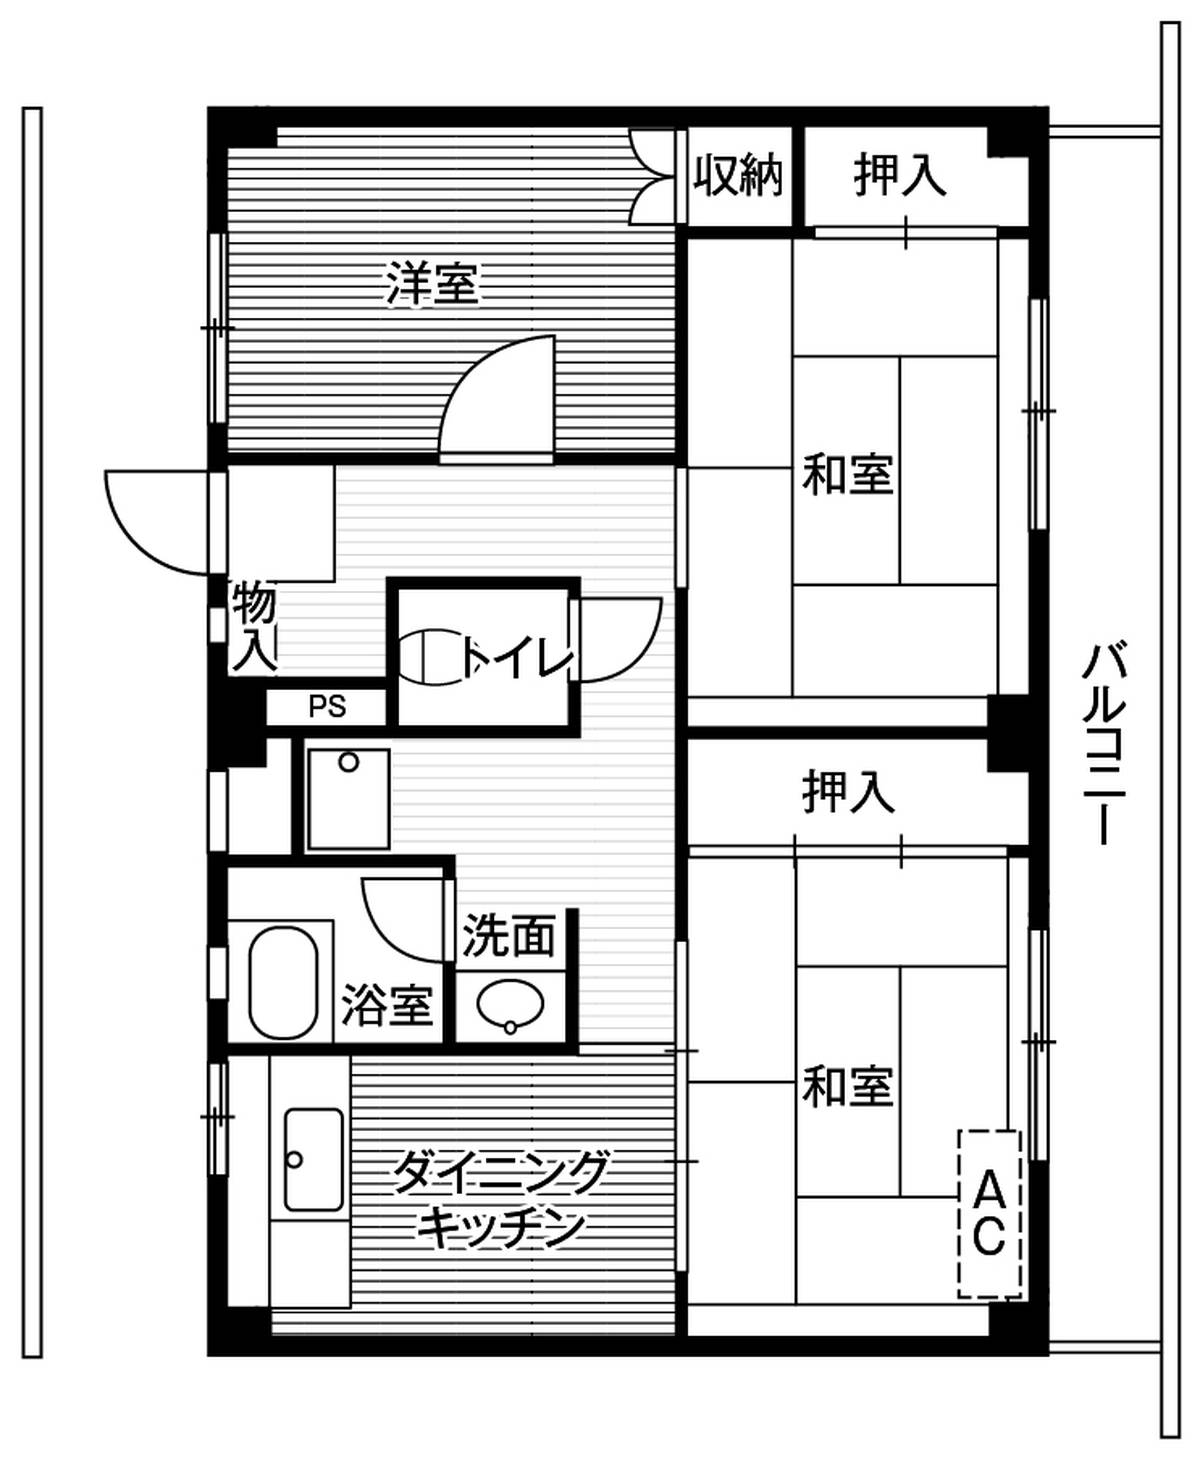 3DK floorplan of Village House Mukaeda in Ichihara-shi